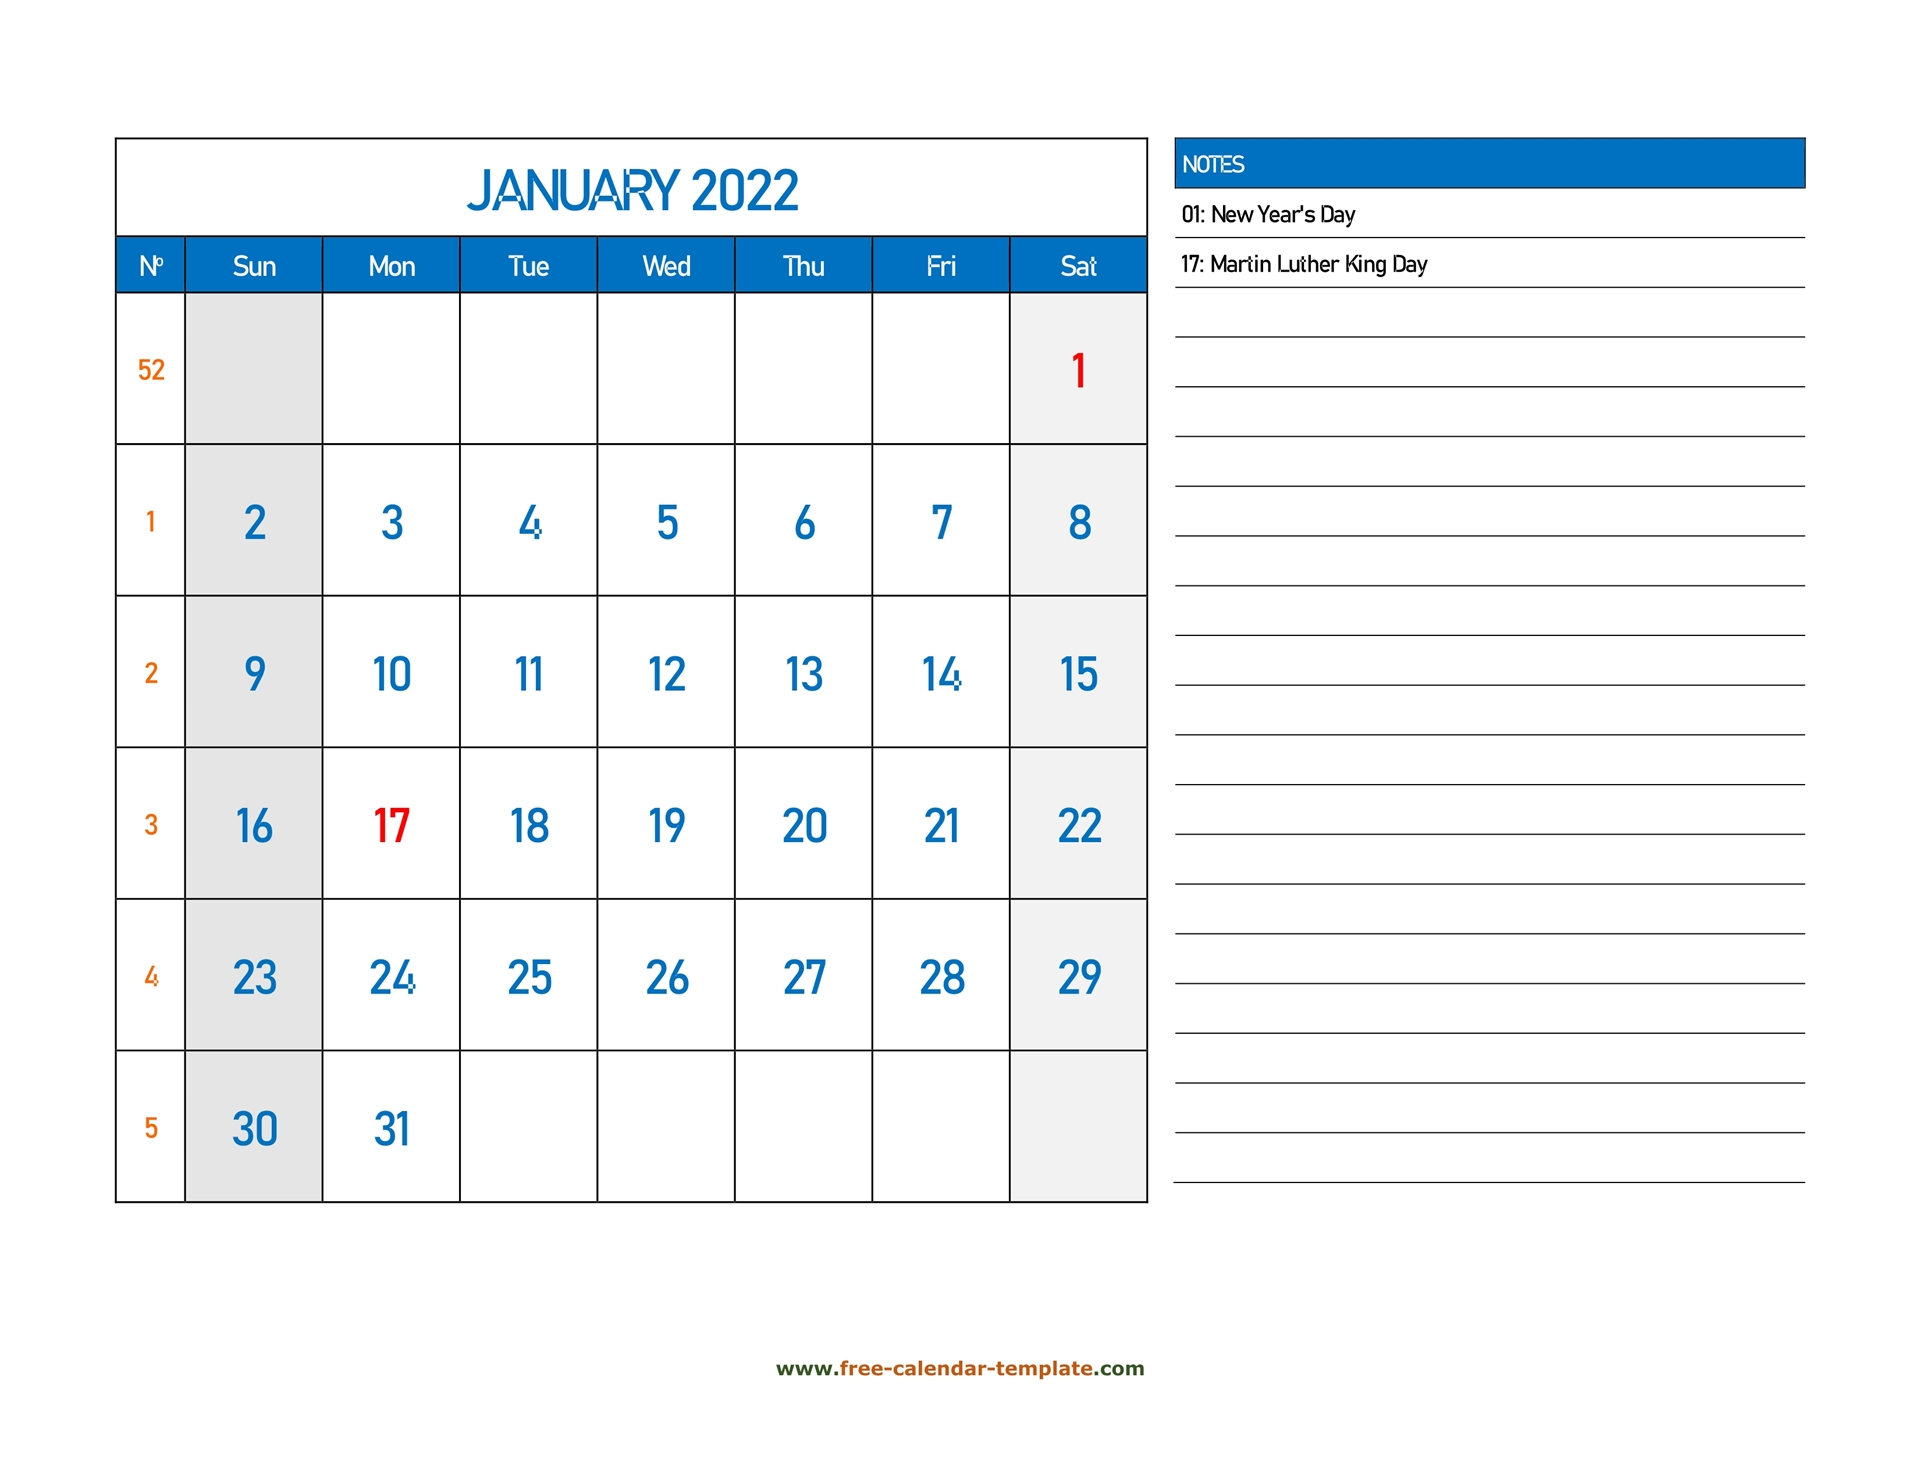 Get Calendar 2022 January Free